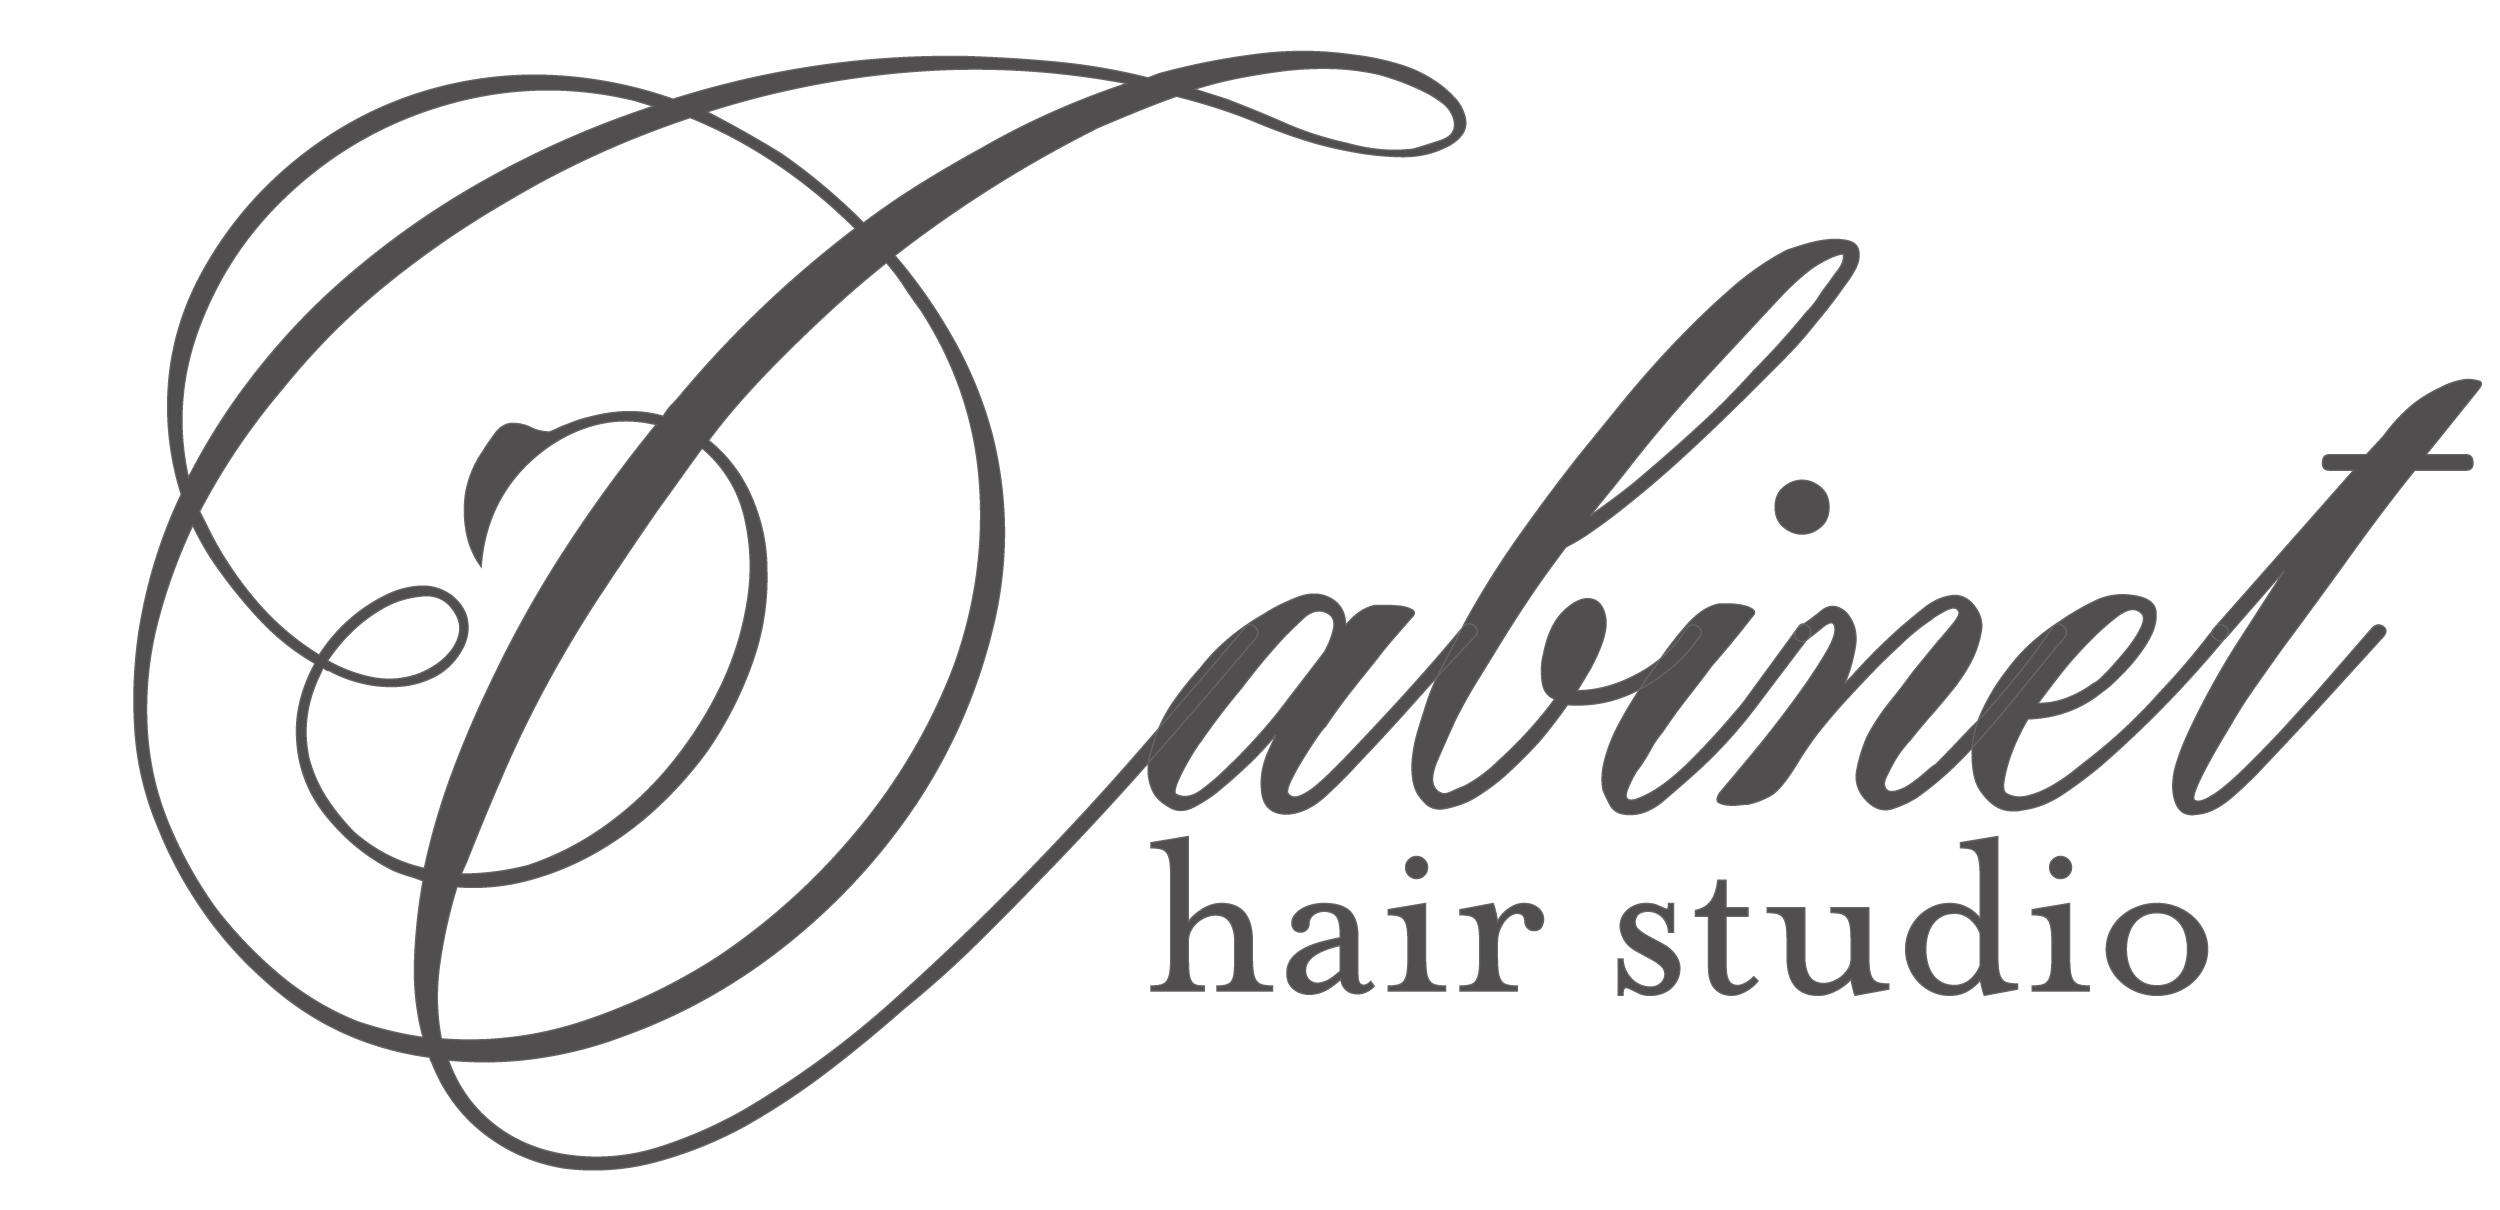 Cabinet Hair Studio